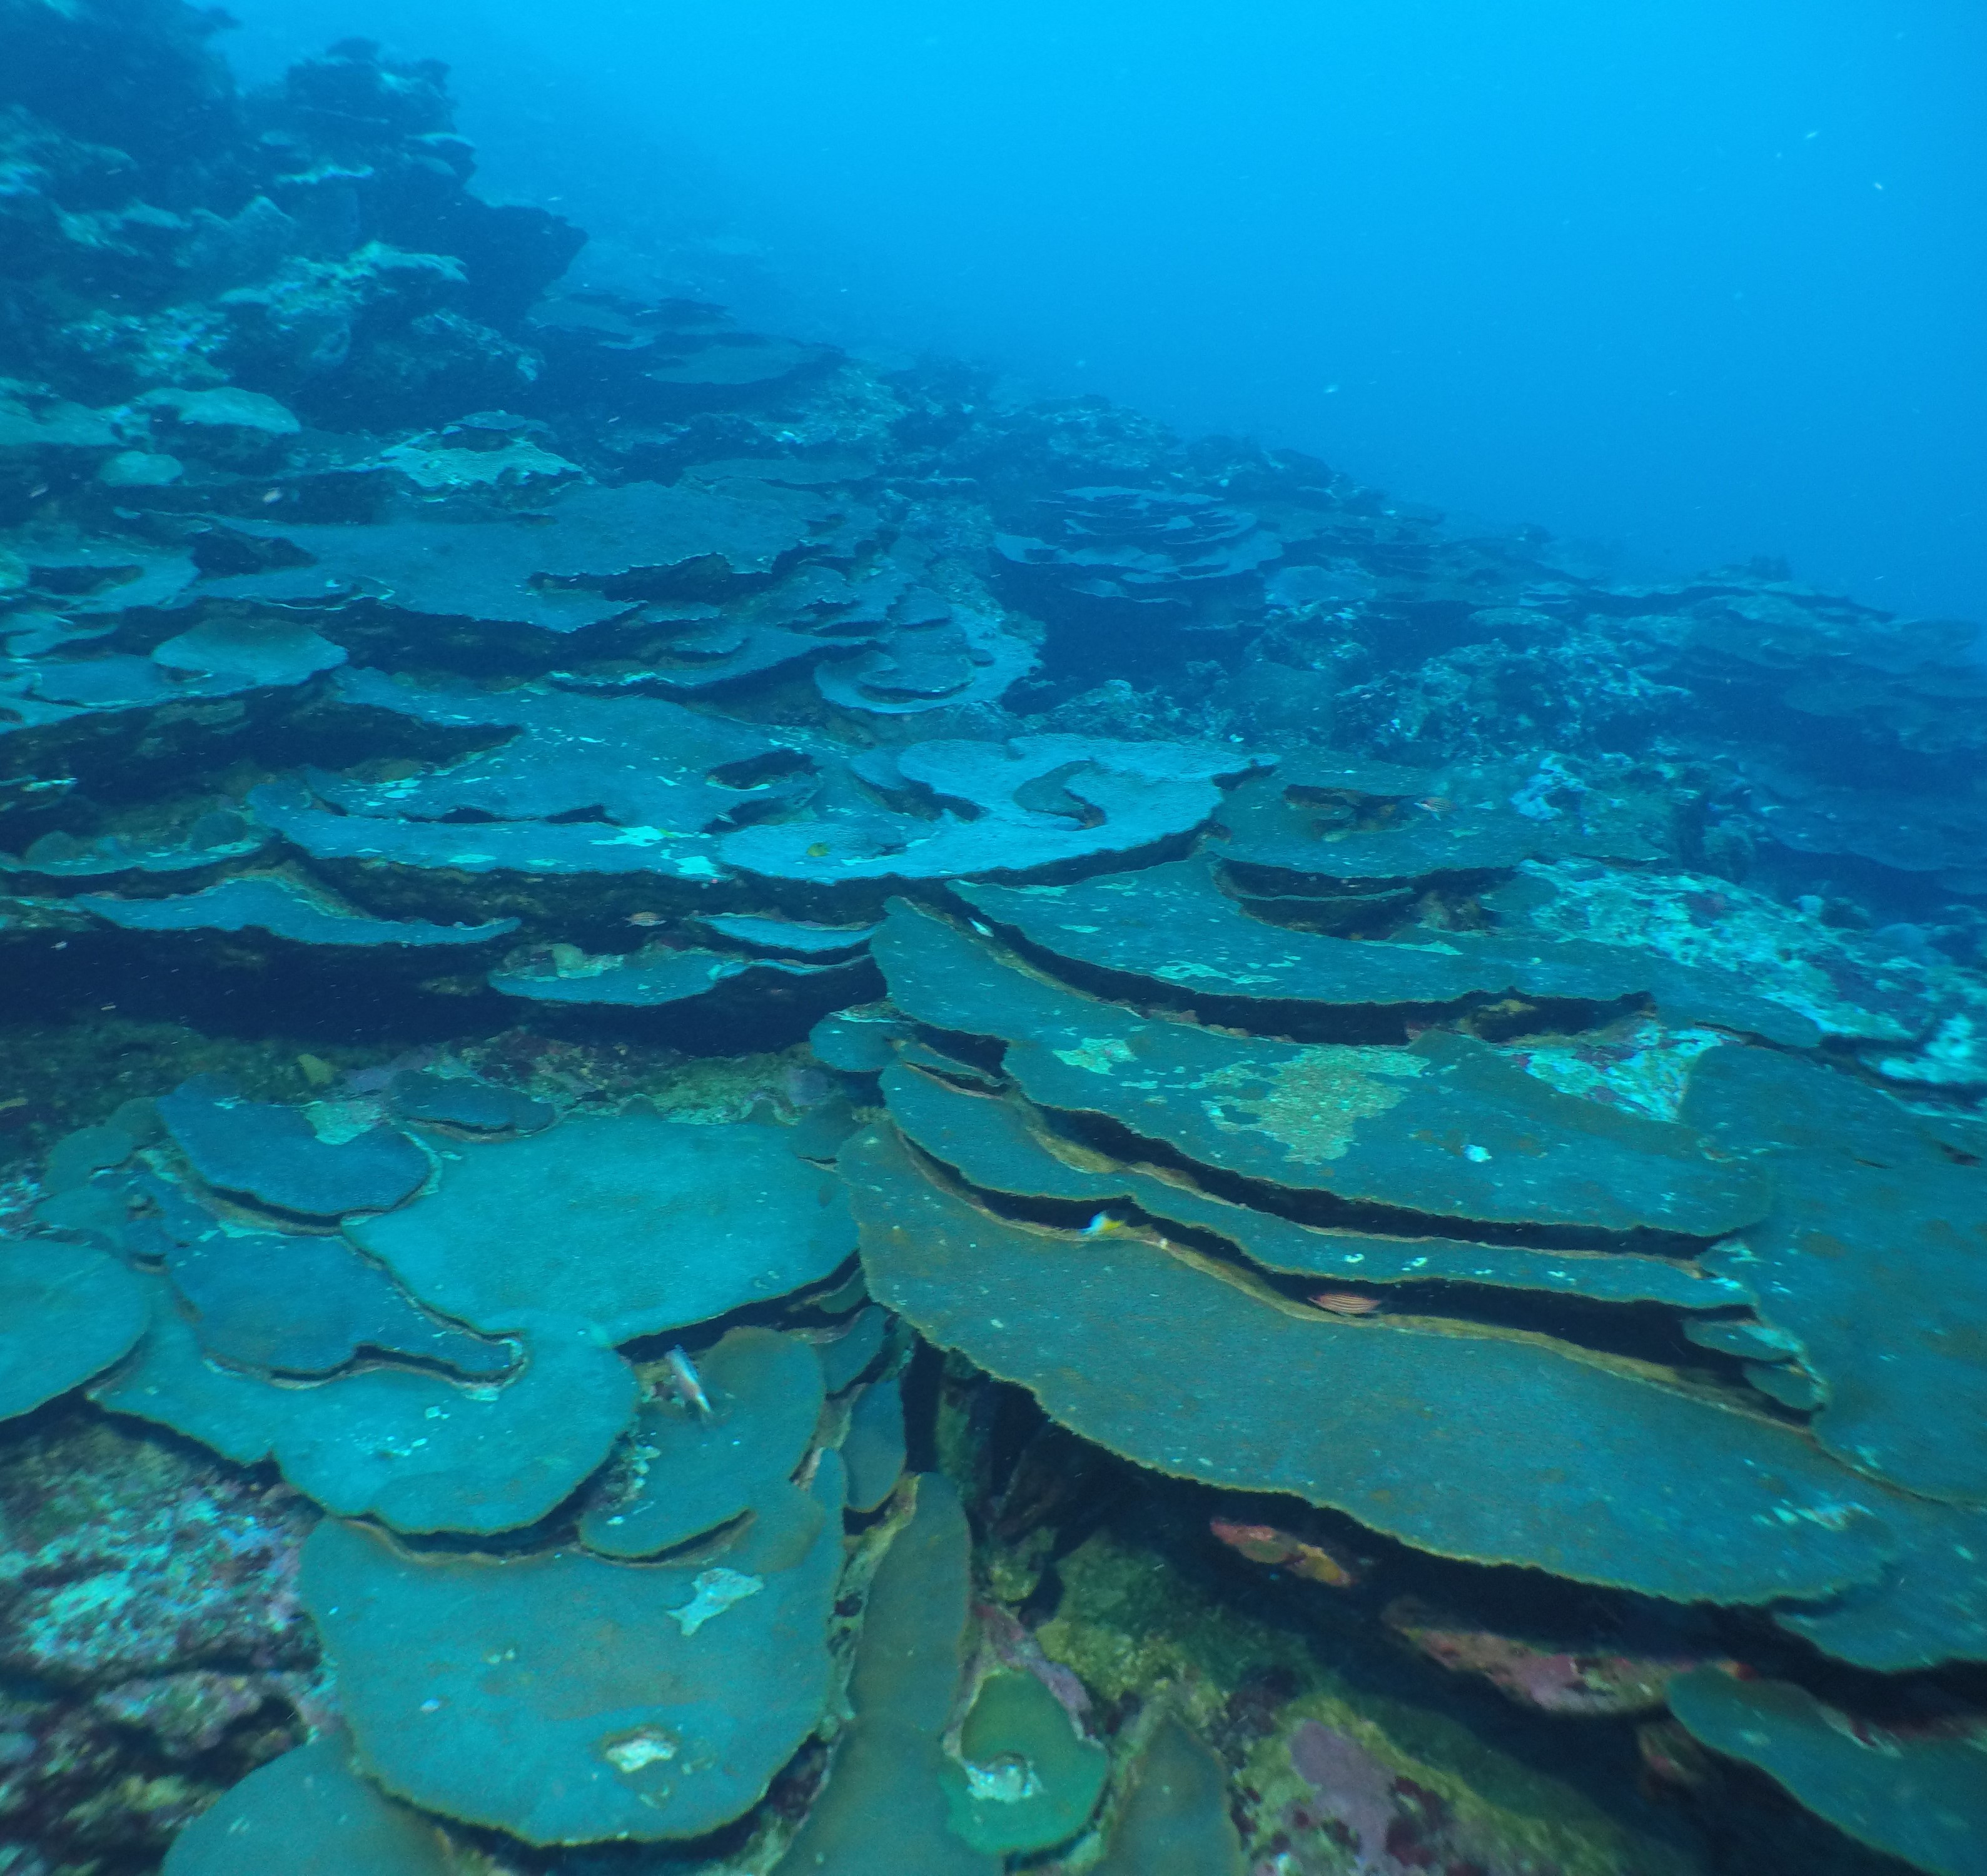 Plating corals 40-50m deep at the FGBNMS. Image credit: GFOE/NOAA